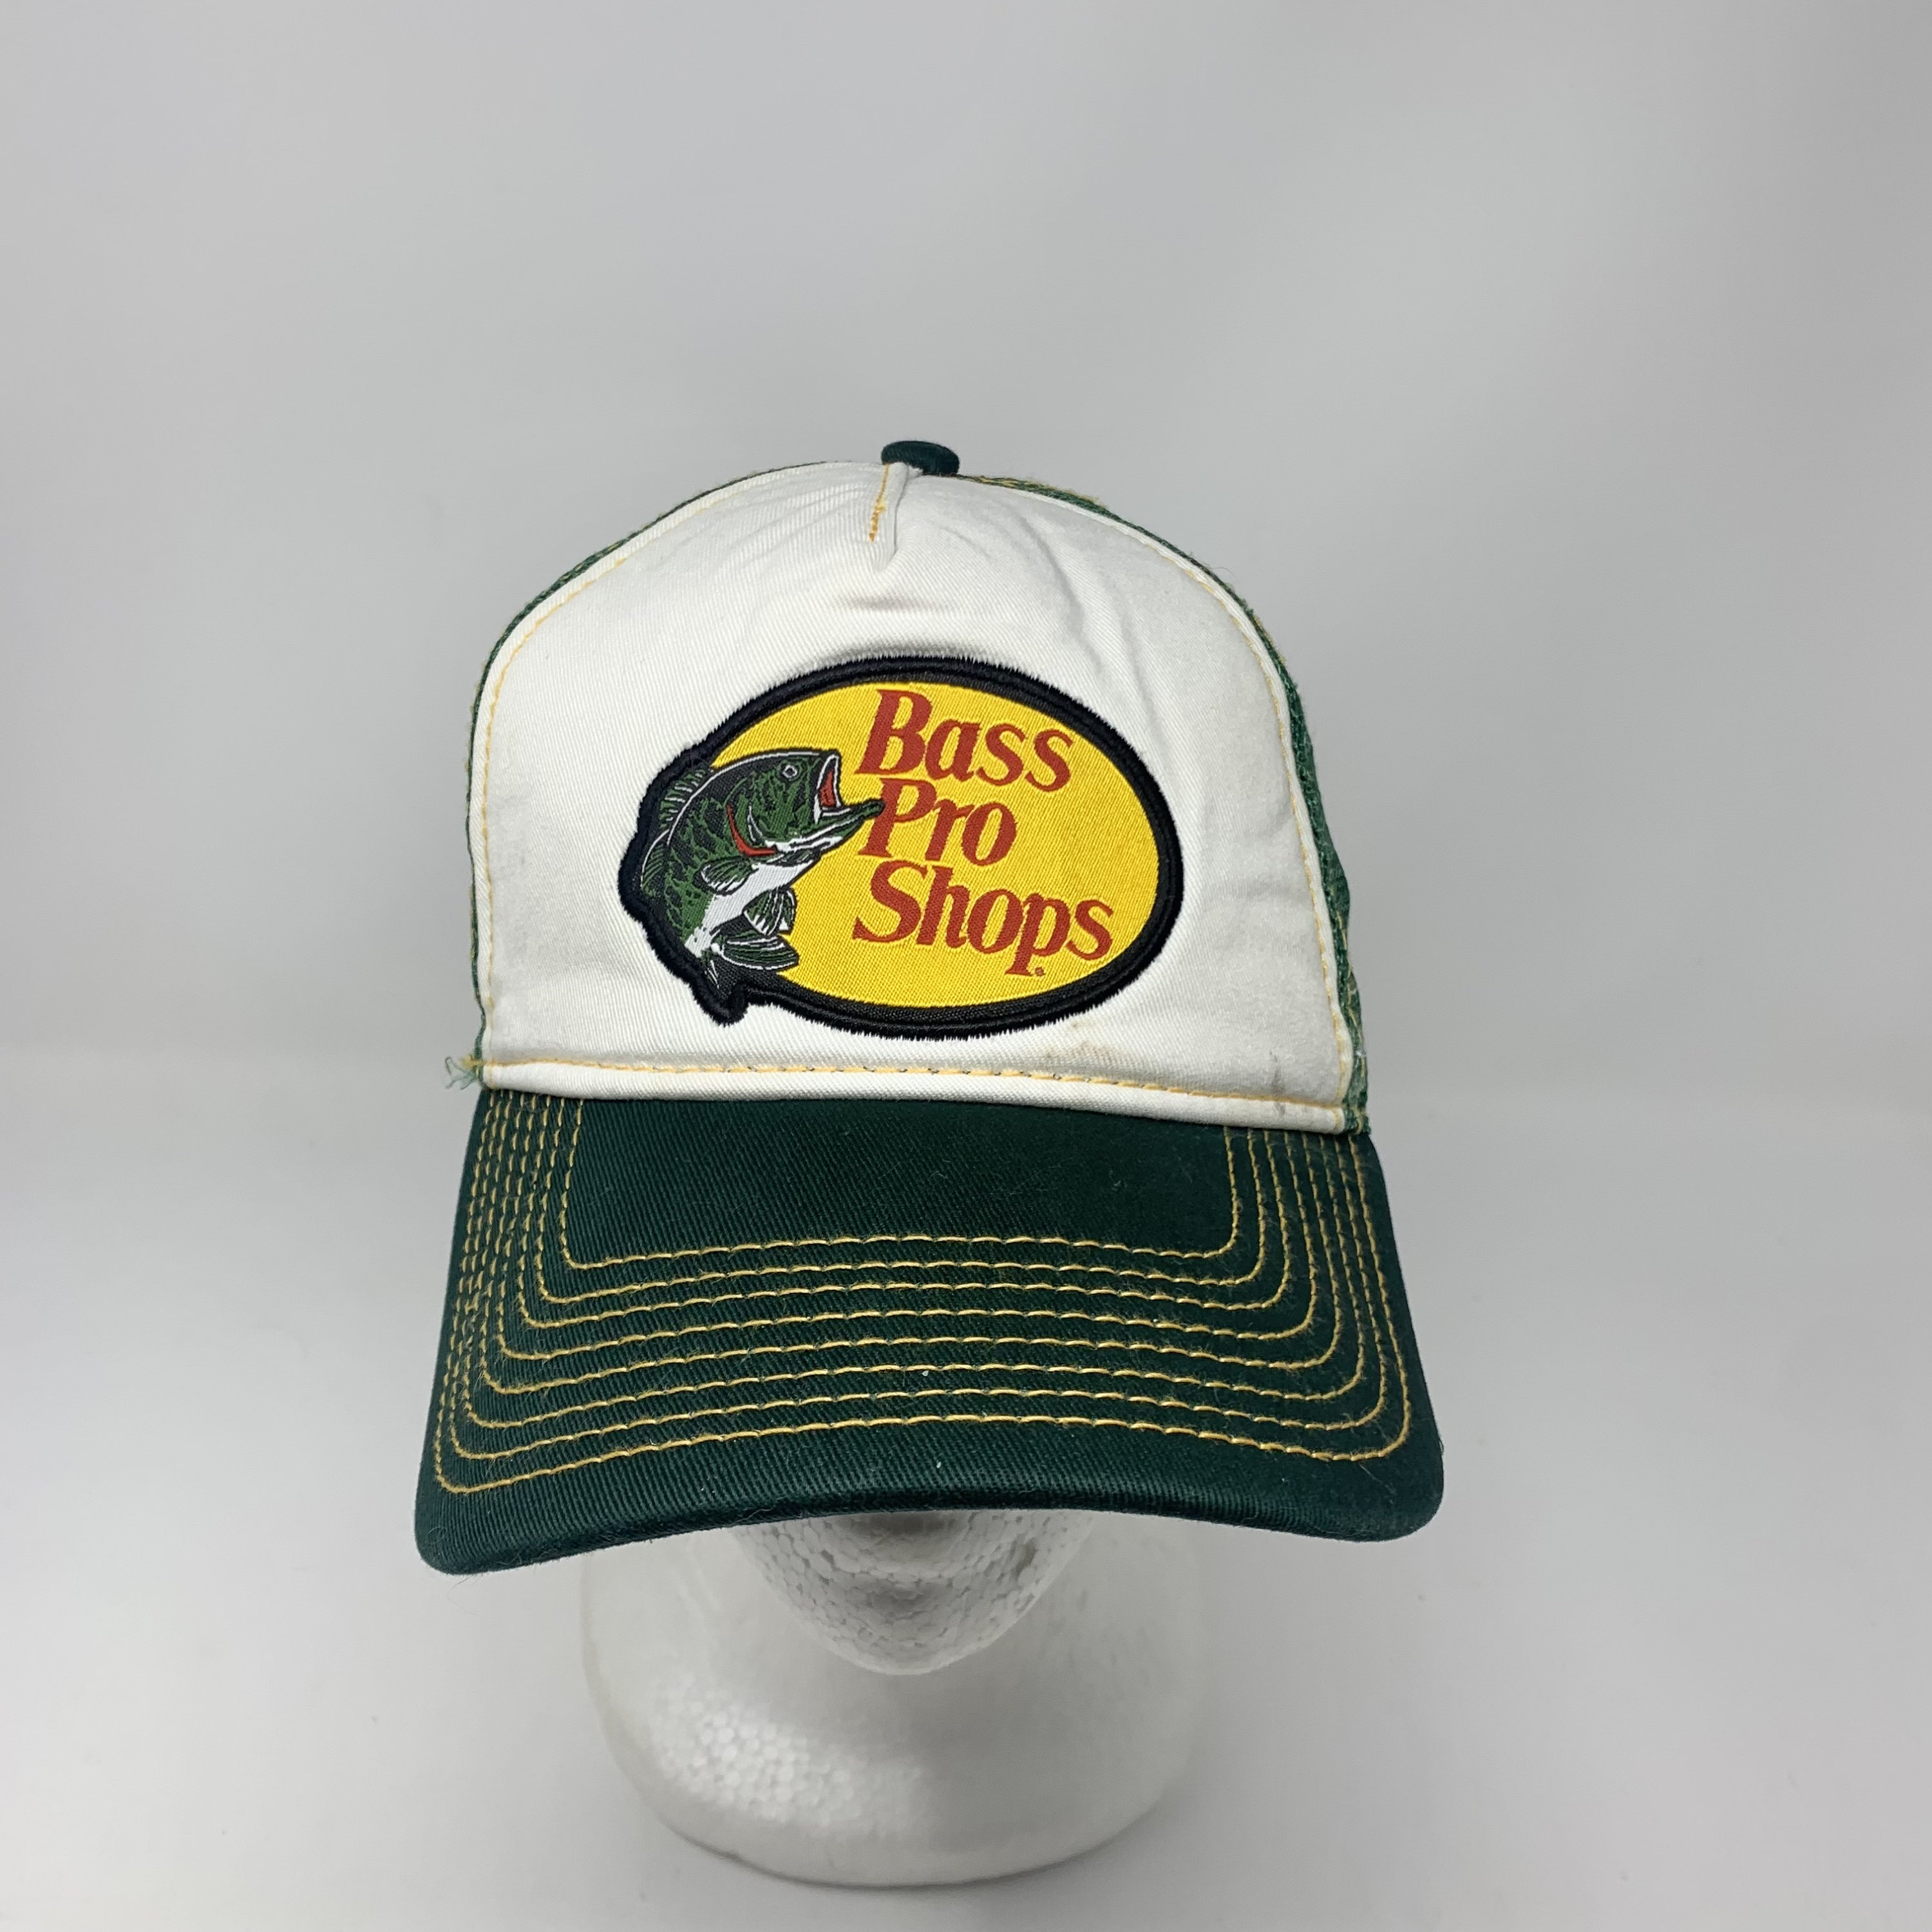 Bass Pro Shops SnapBack Trucker Hat - Fishing Green White Yellow Red